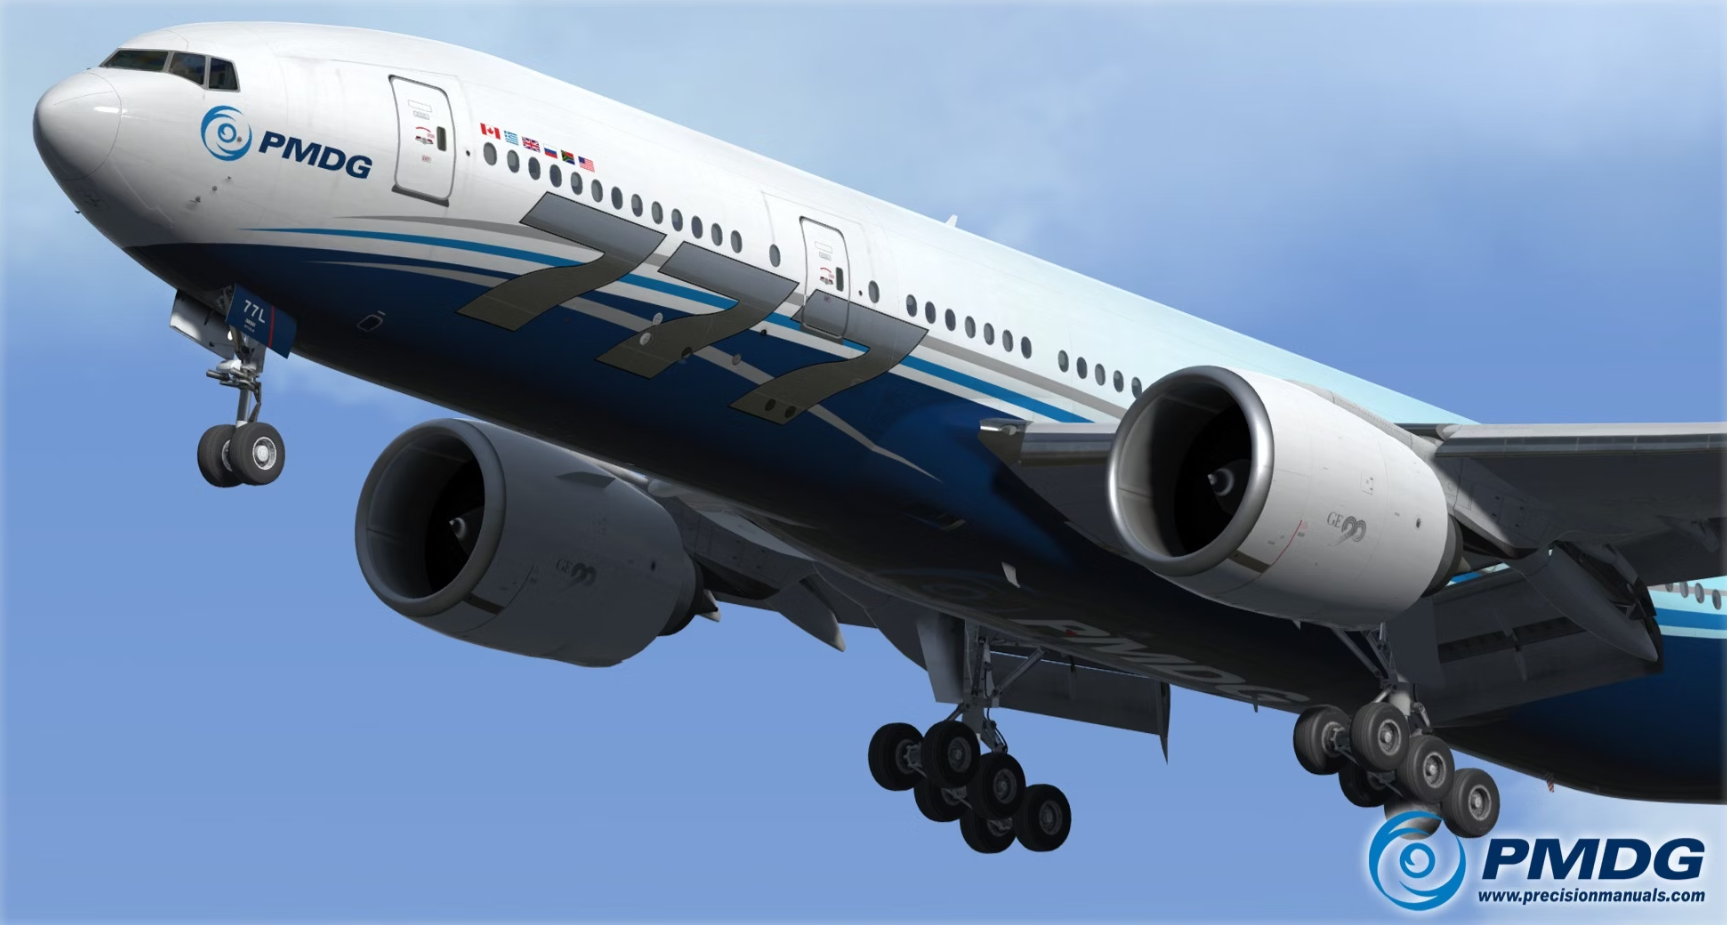 BRAND NEW MICROSOFT FLIGHT SIMULATOR 2024 ANNOUNCED! 